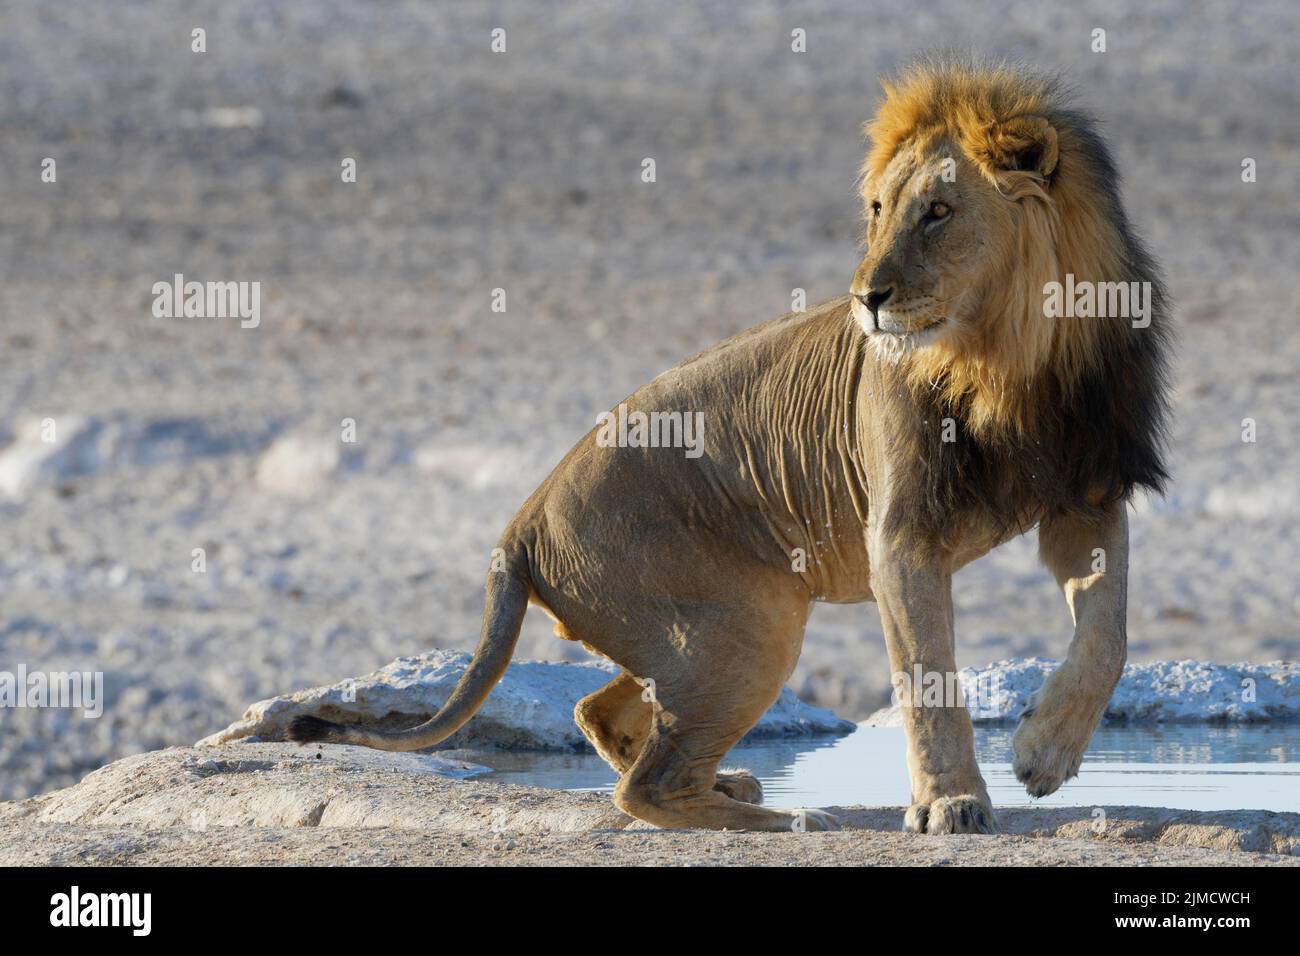 African lion (Panthera leo), lying adult male lion rising, at waterhole, alert, Etosha National Park, Namibia, Africa Stock Photo